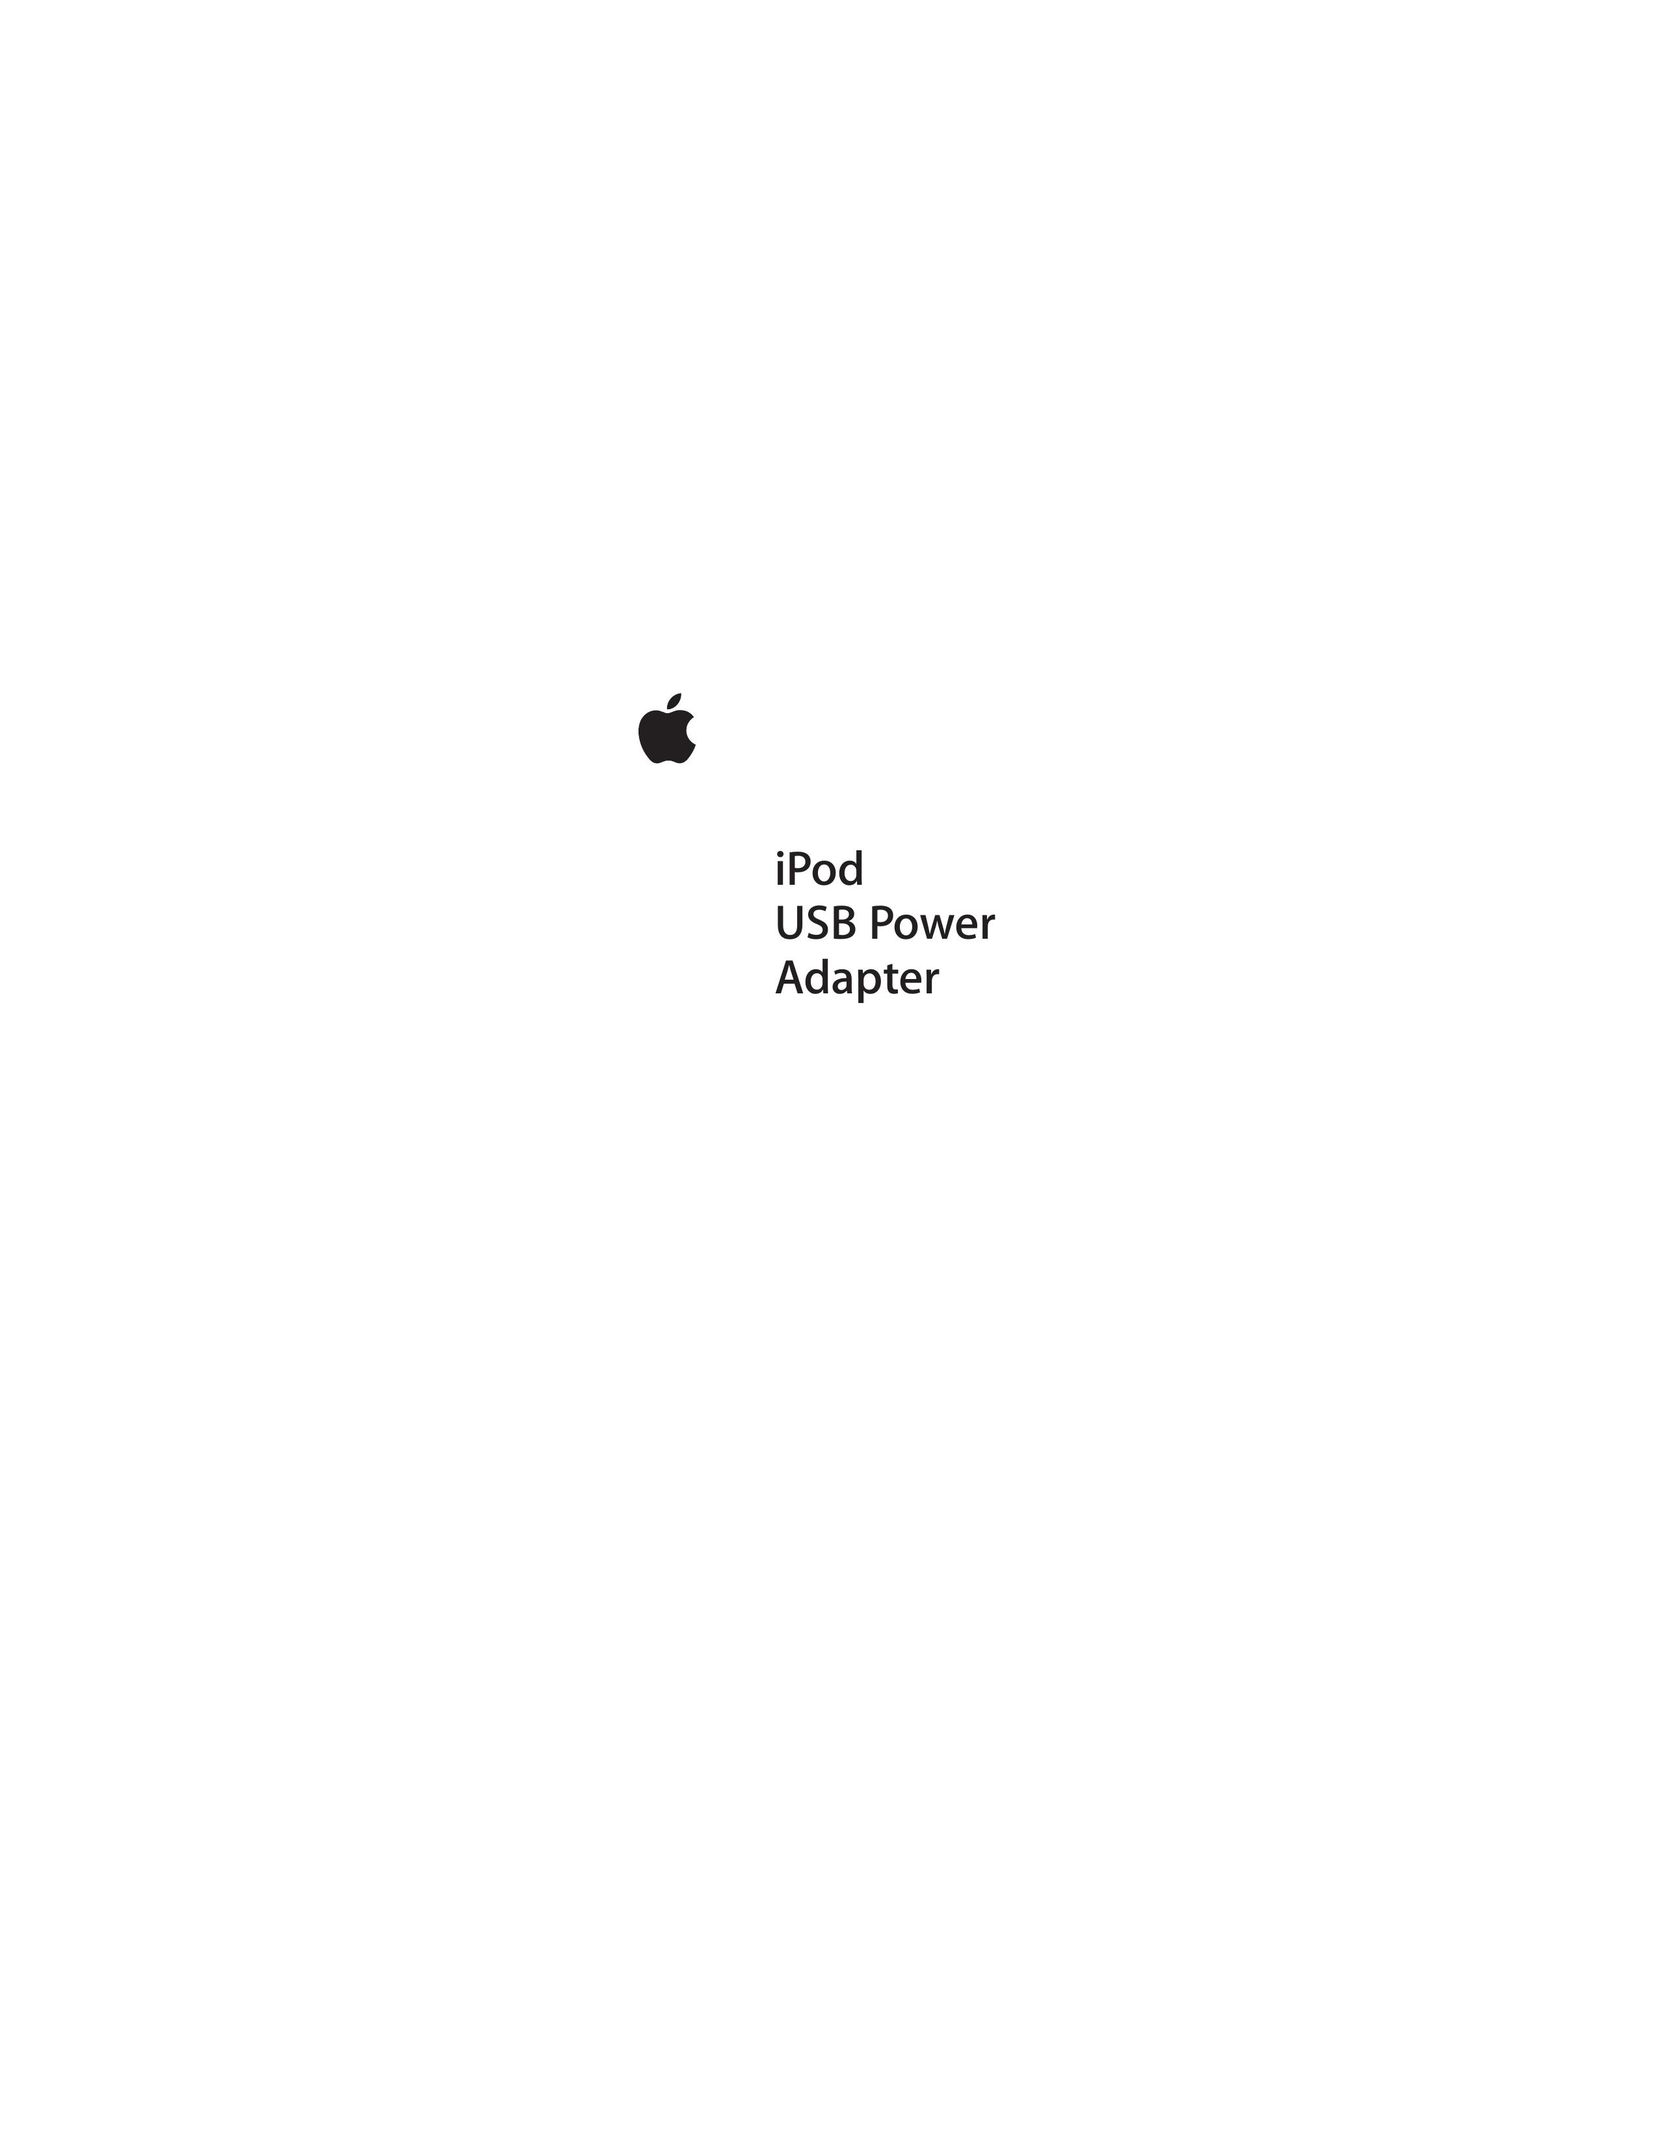 Apple USB Power Adapter Power Supply User Manual